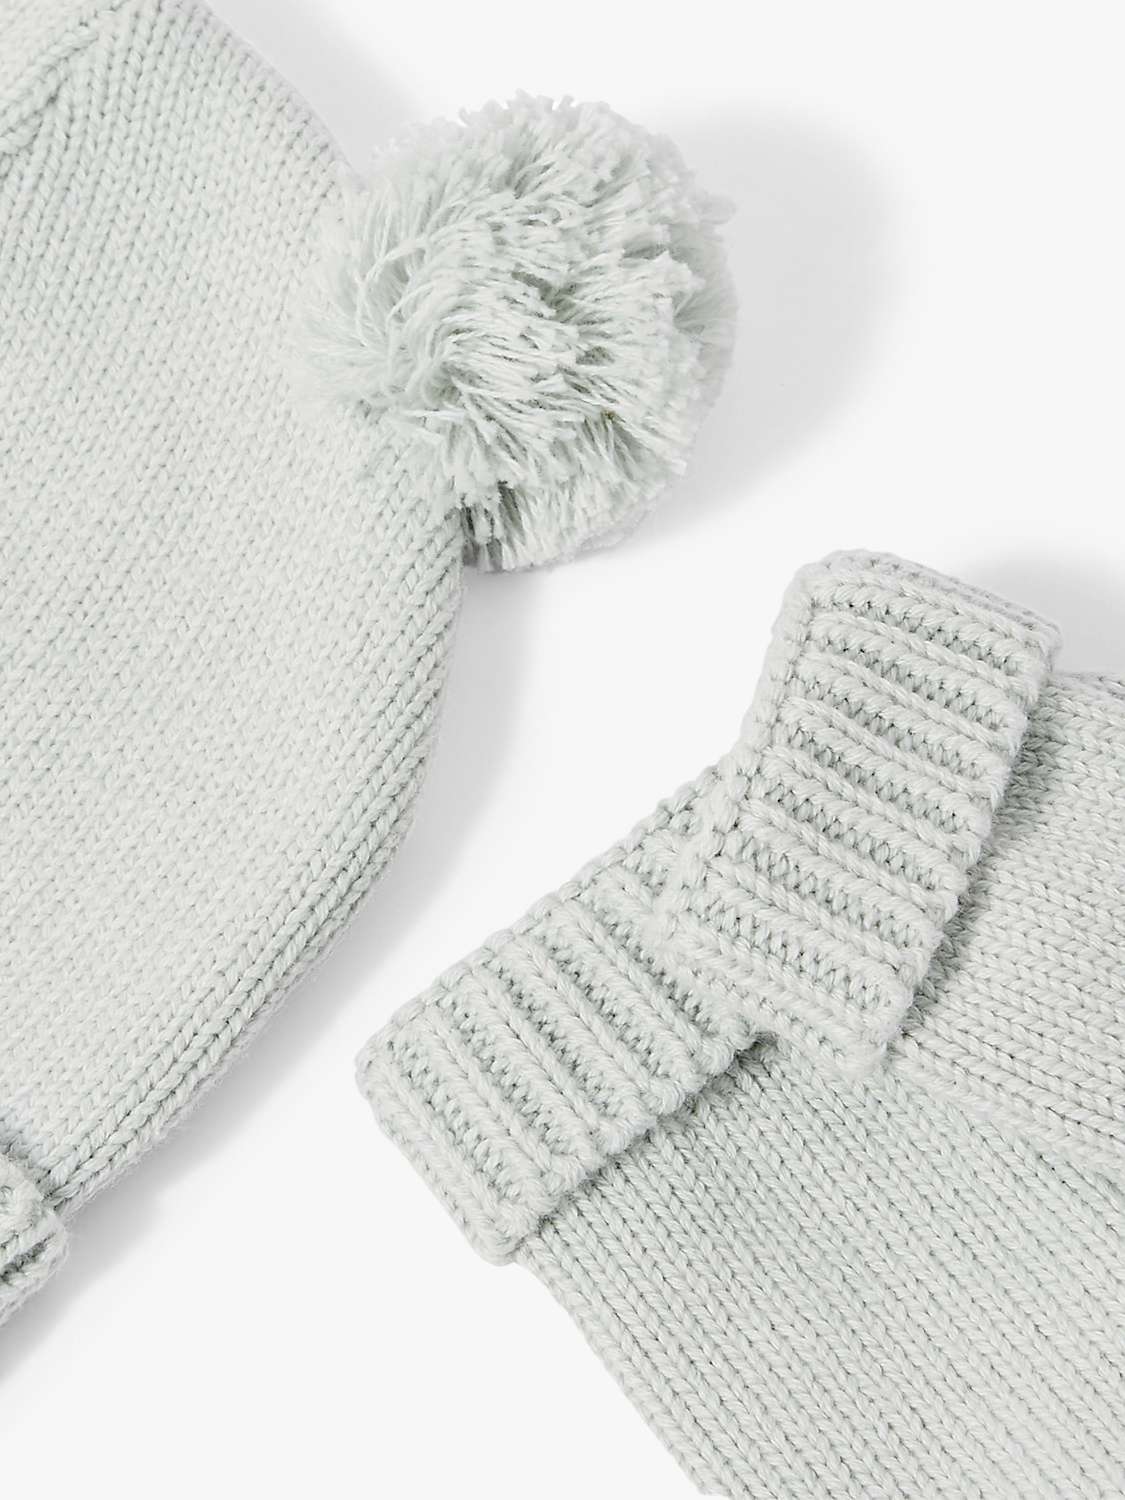 Buy Katie Loxton Baby Hat & Mittens Gift Set Online at johnlewis.com